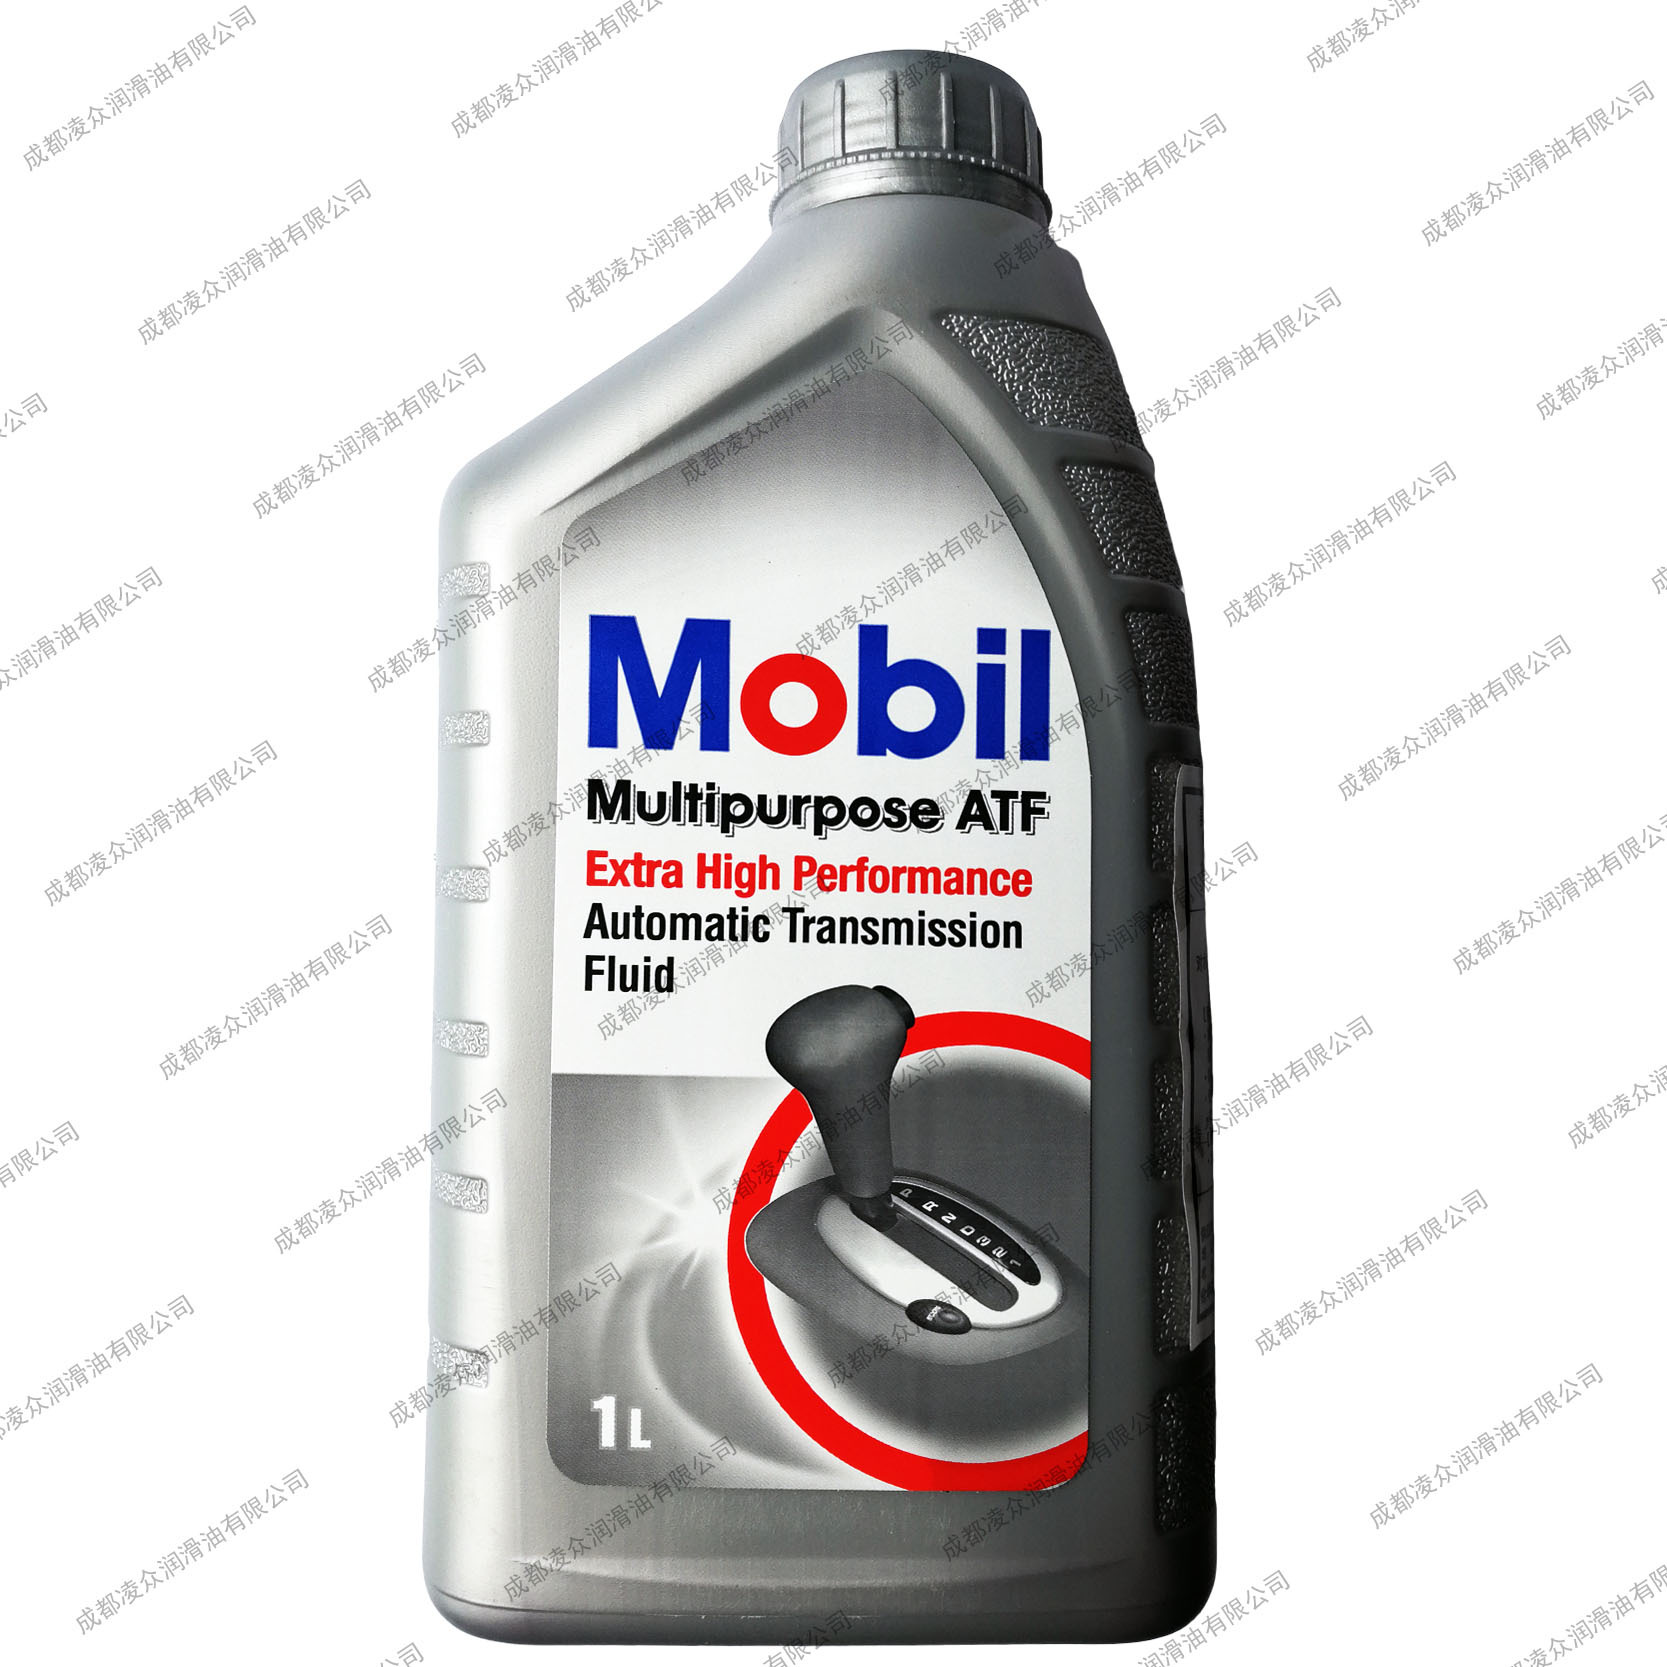 M|obil Multipurpose ATF美|孚ATF多用途自动排挡油 自动变速箱油